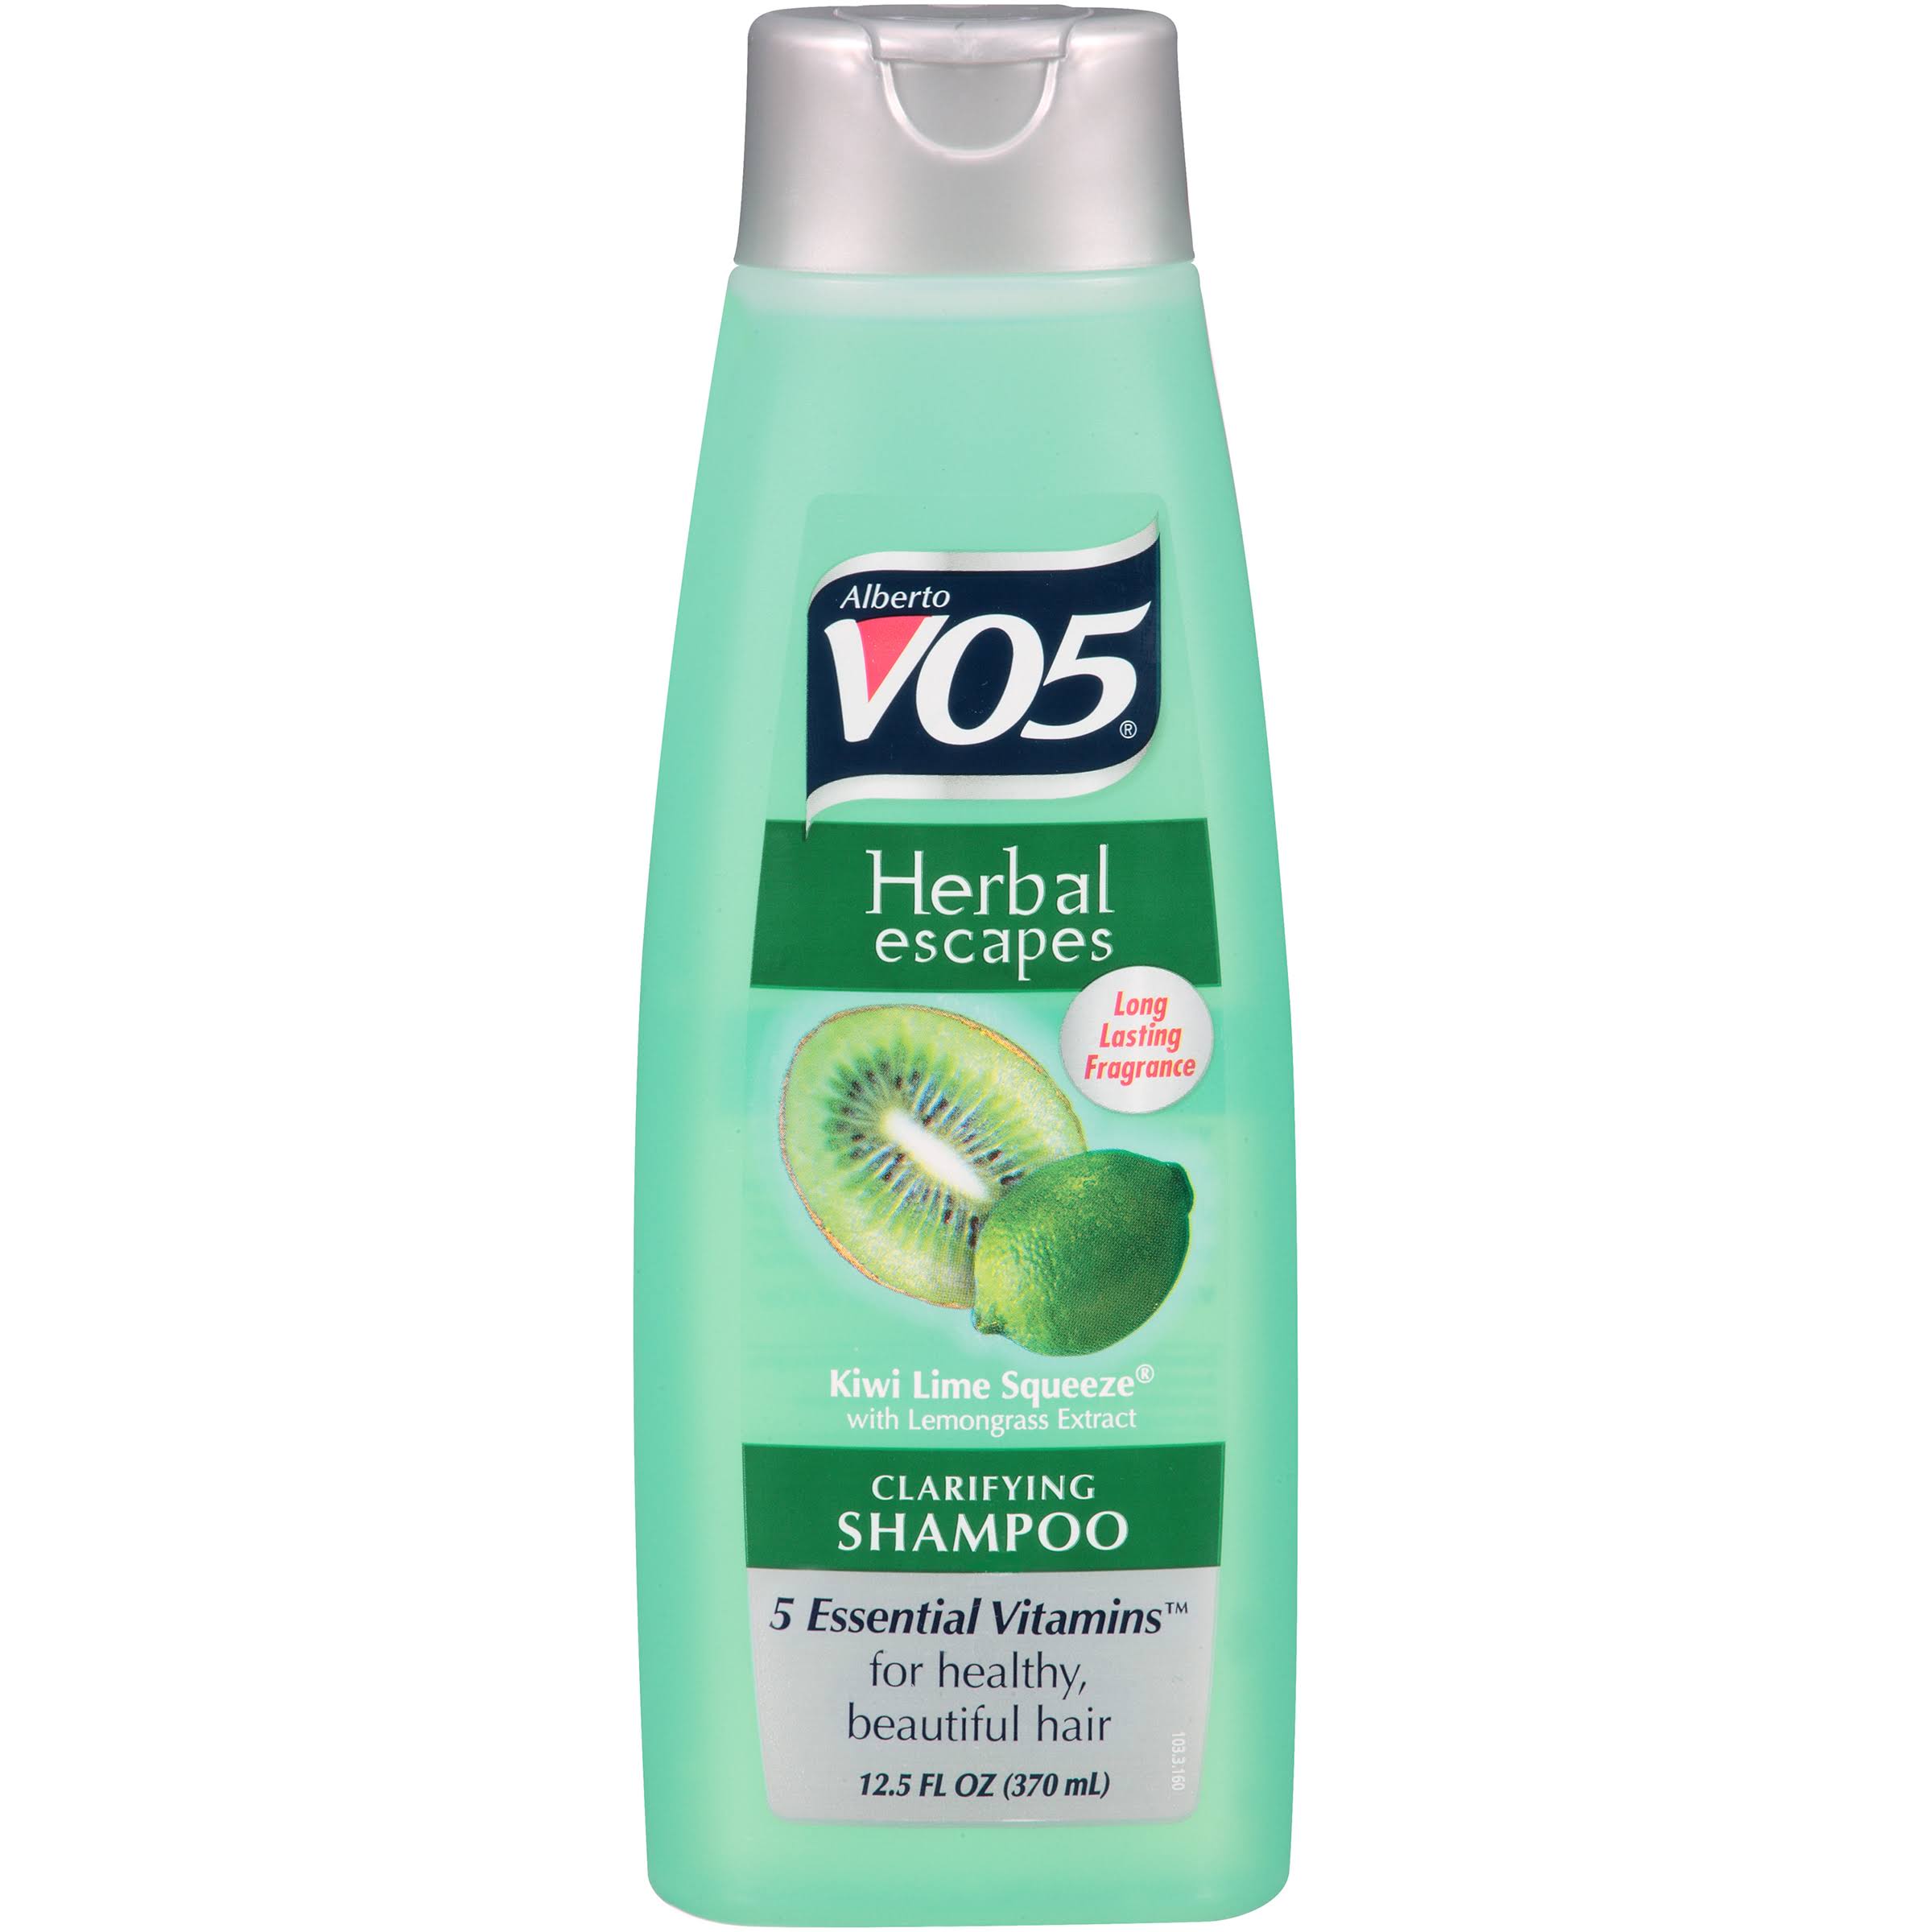 Alberto VO5 Herbal Escapes Clarifying Shampoo - Kiwi Lime Squeeze, 370ml